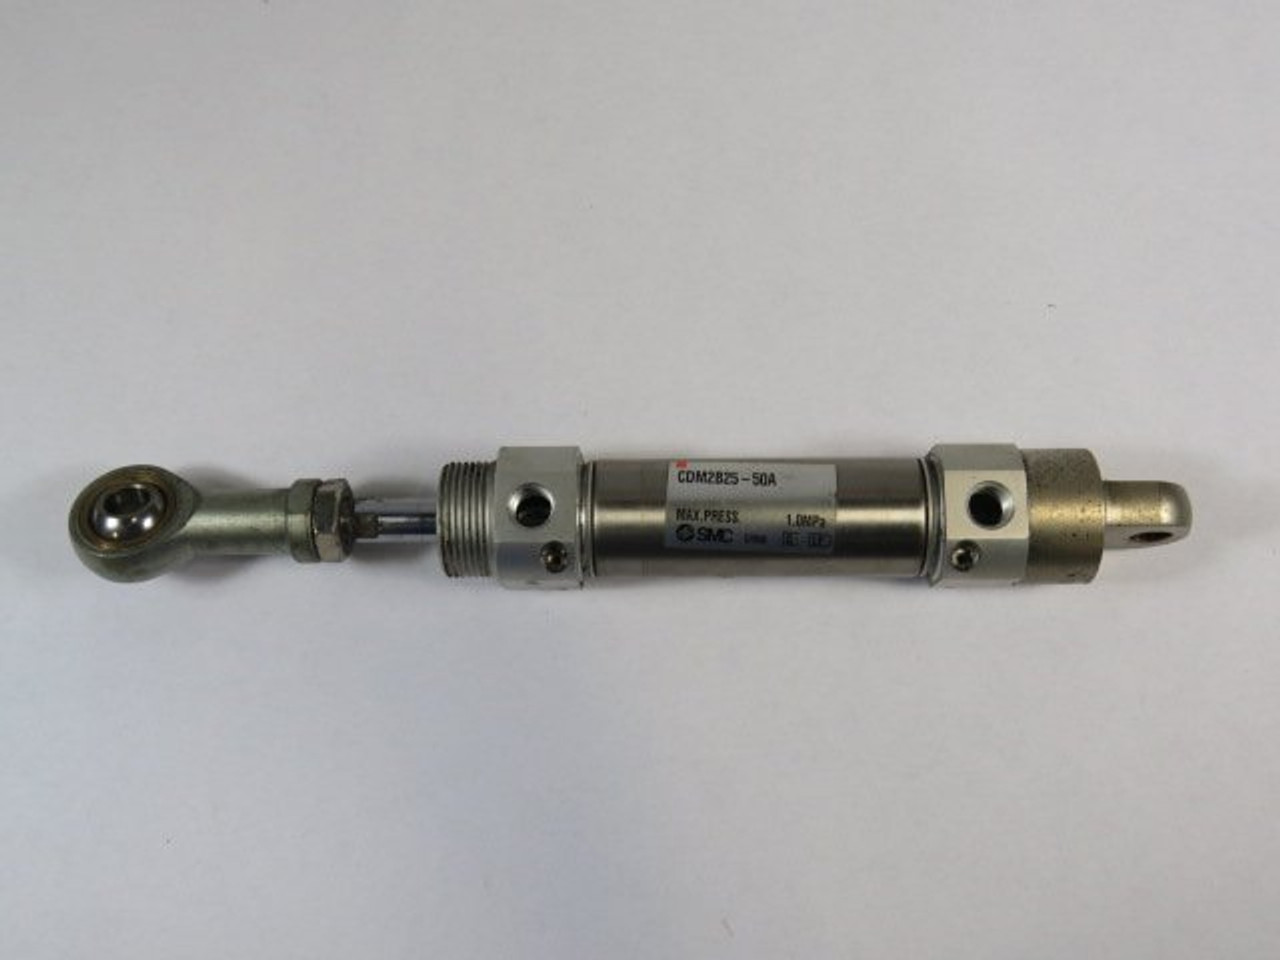 SMC CDM2B25-50A Pneumatic Cylinder 25mm Bore 50mm Stroke 1.0MPa USED